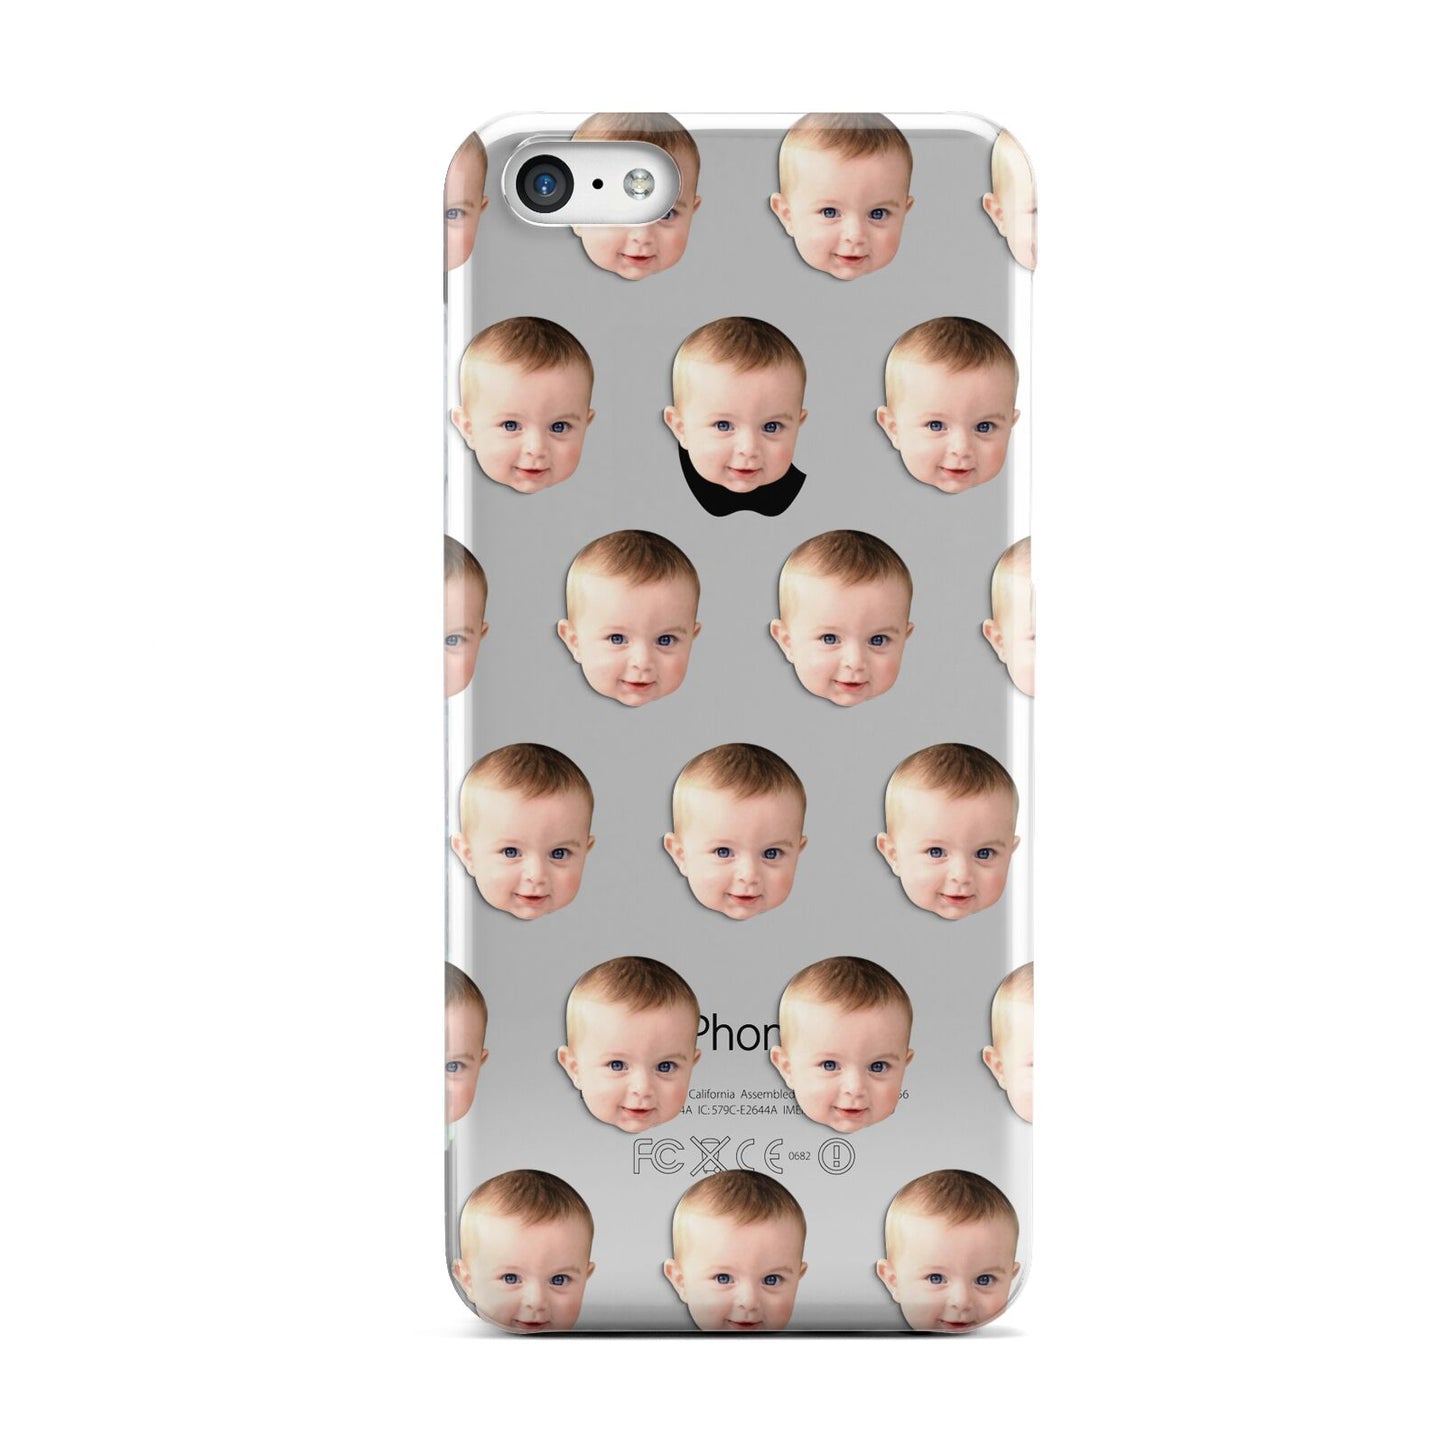 Baby Face Apple iPhone 5c Case